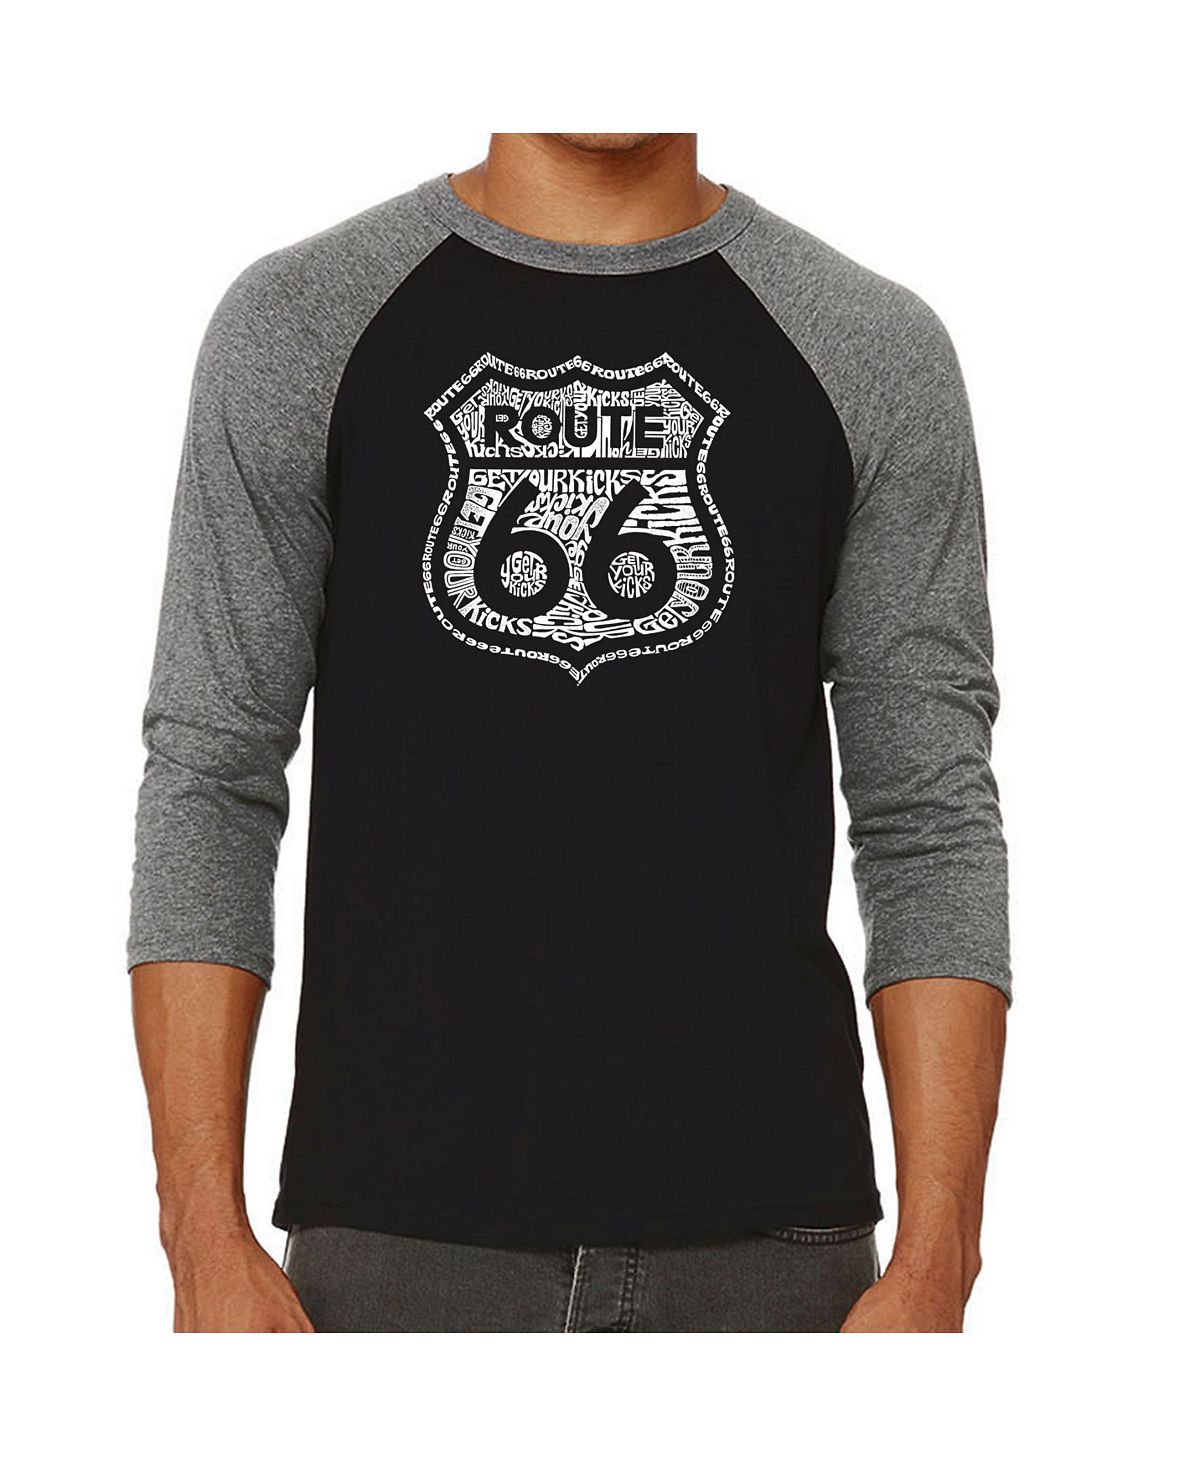 Мужская футболка с надписью get your kicks on route 66 реглан с надписями LA Pop Art, серый anthony piers сube route